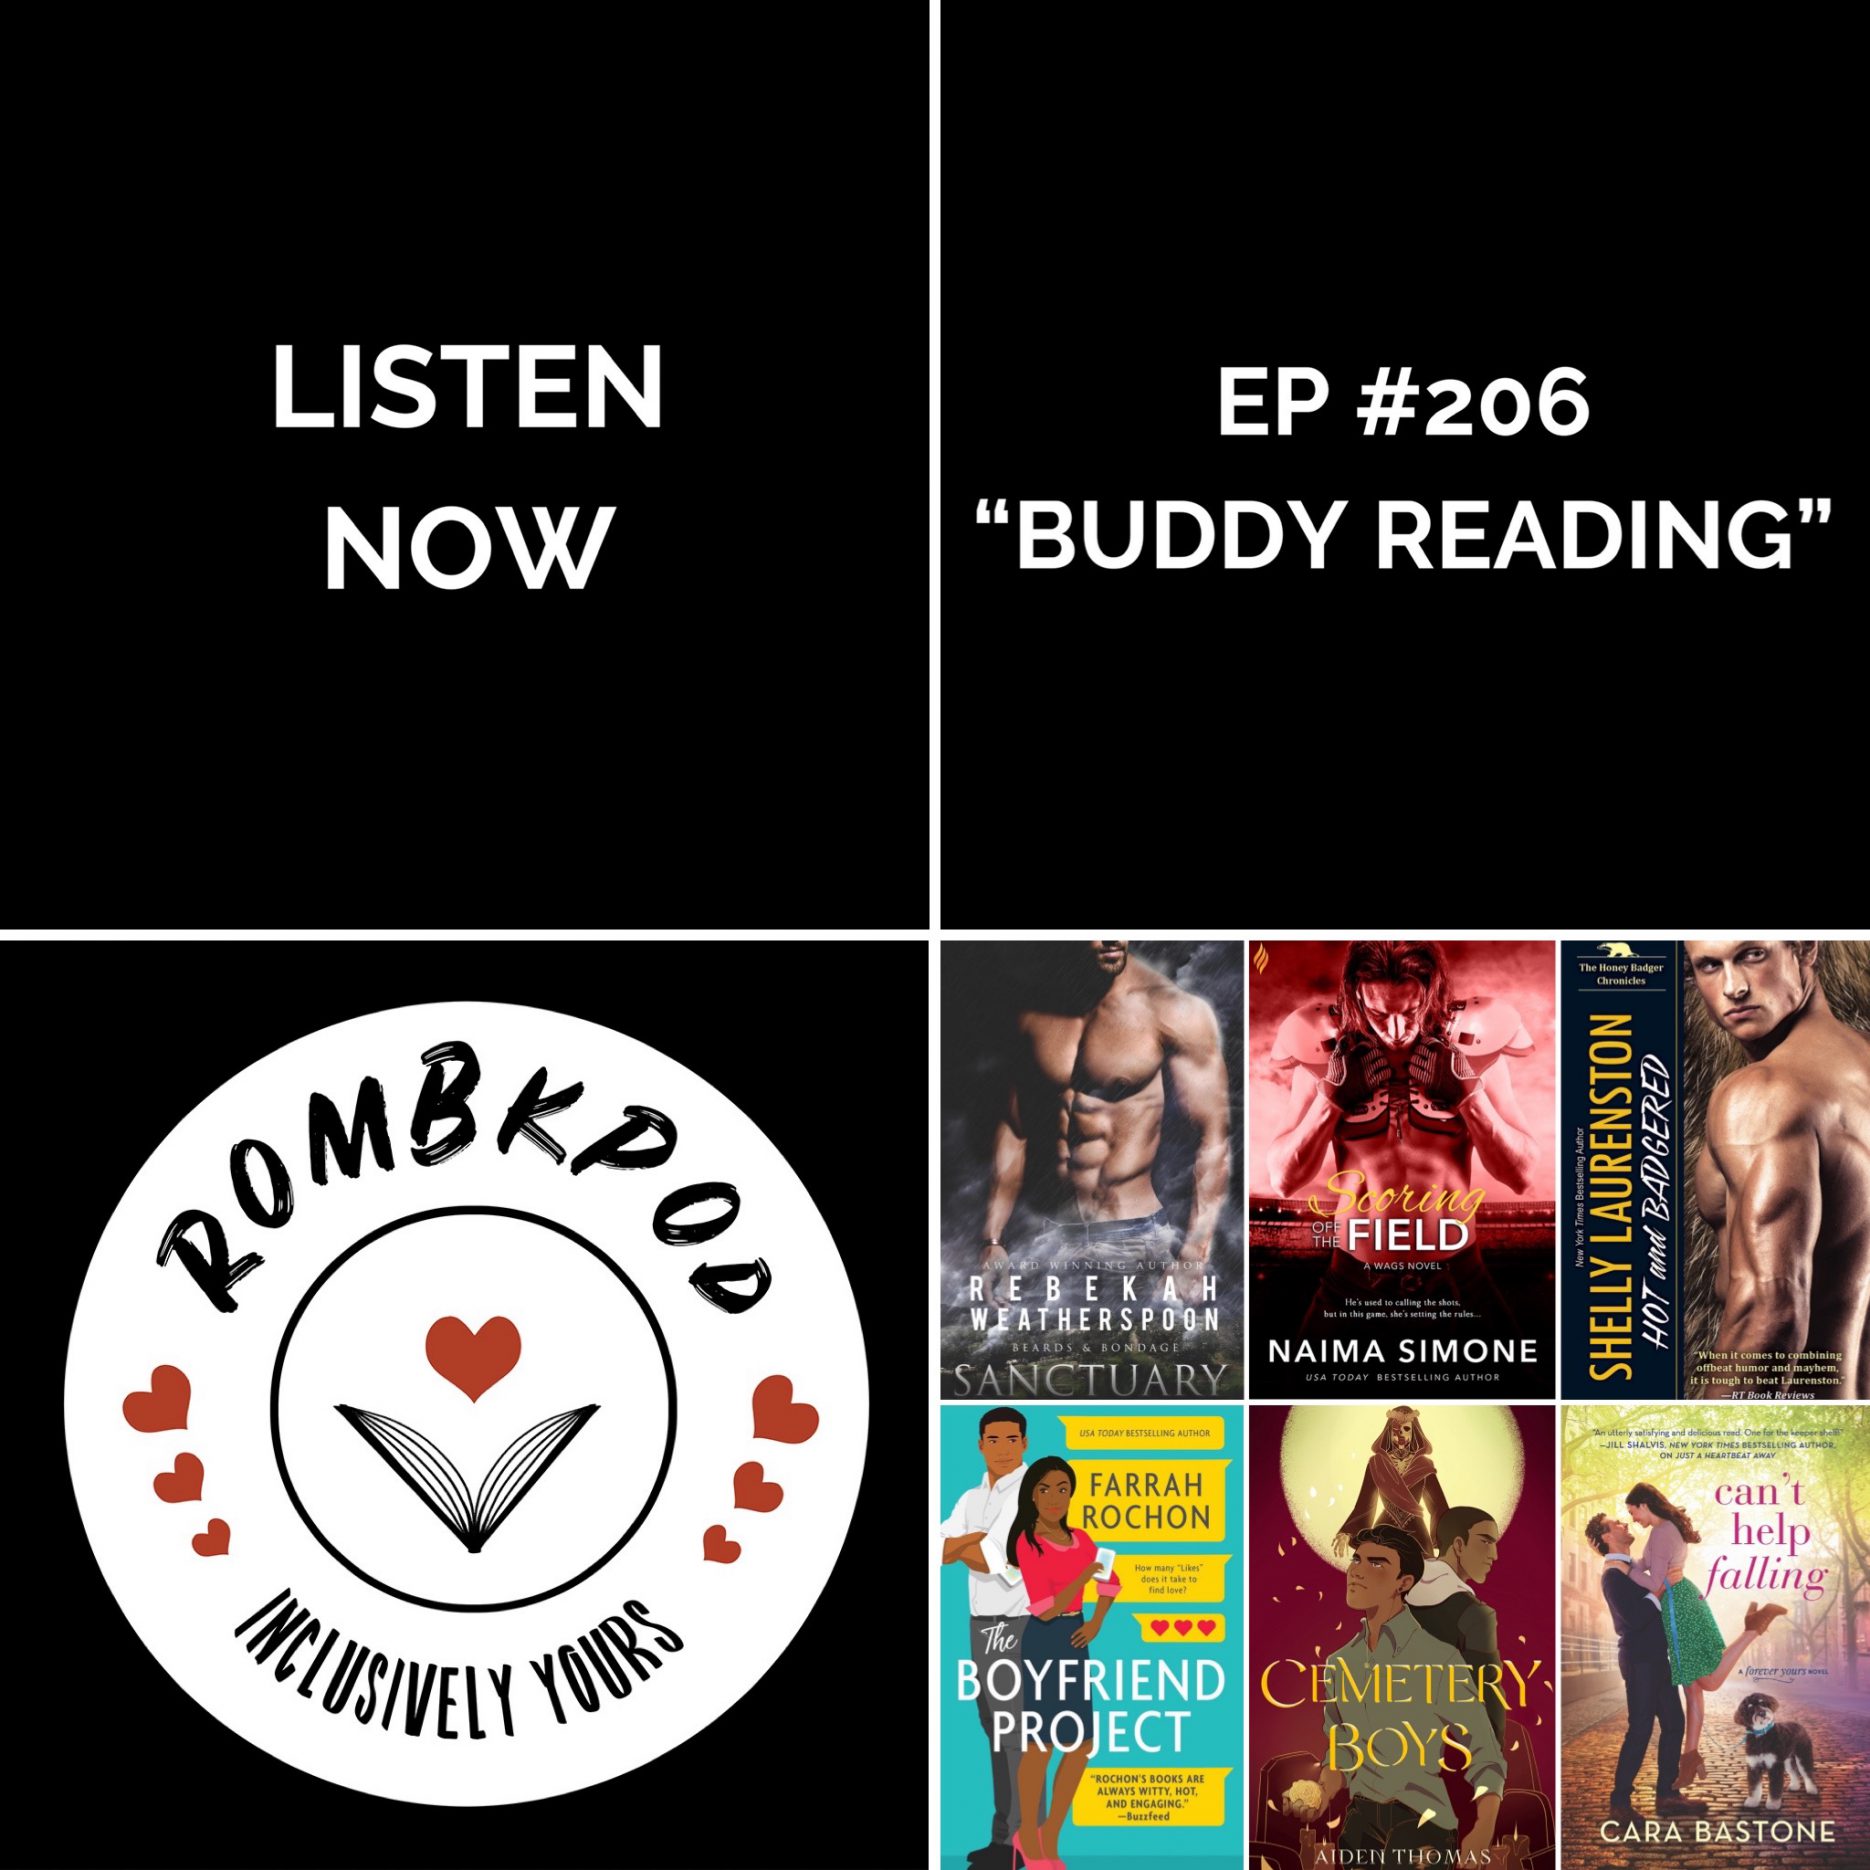 IMAGE: lower left corner, RomBkPod heart logo; lower right corner, ep #206 cover collage; IMAGE TEXT: Listen Now, ep #206 "Buddy Reading"